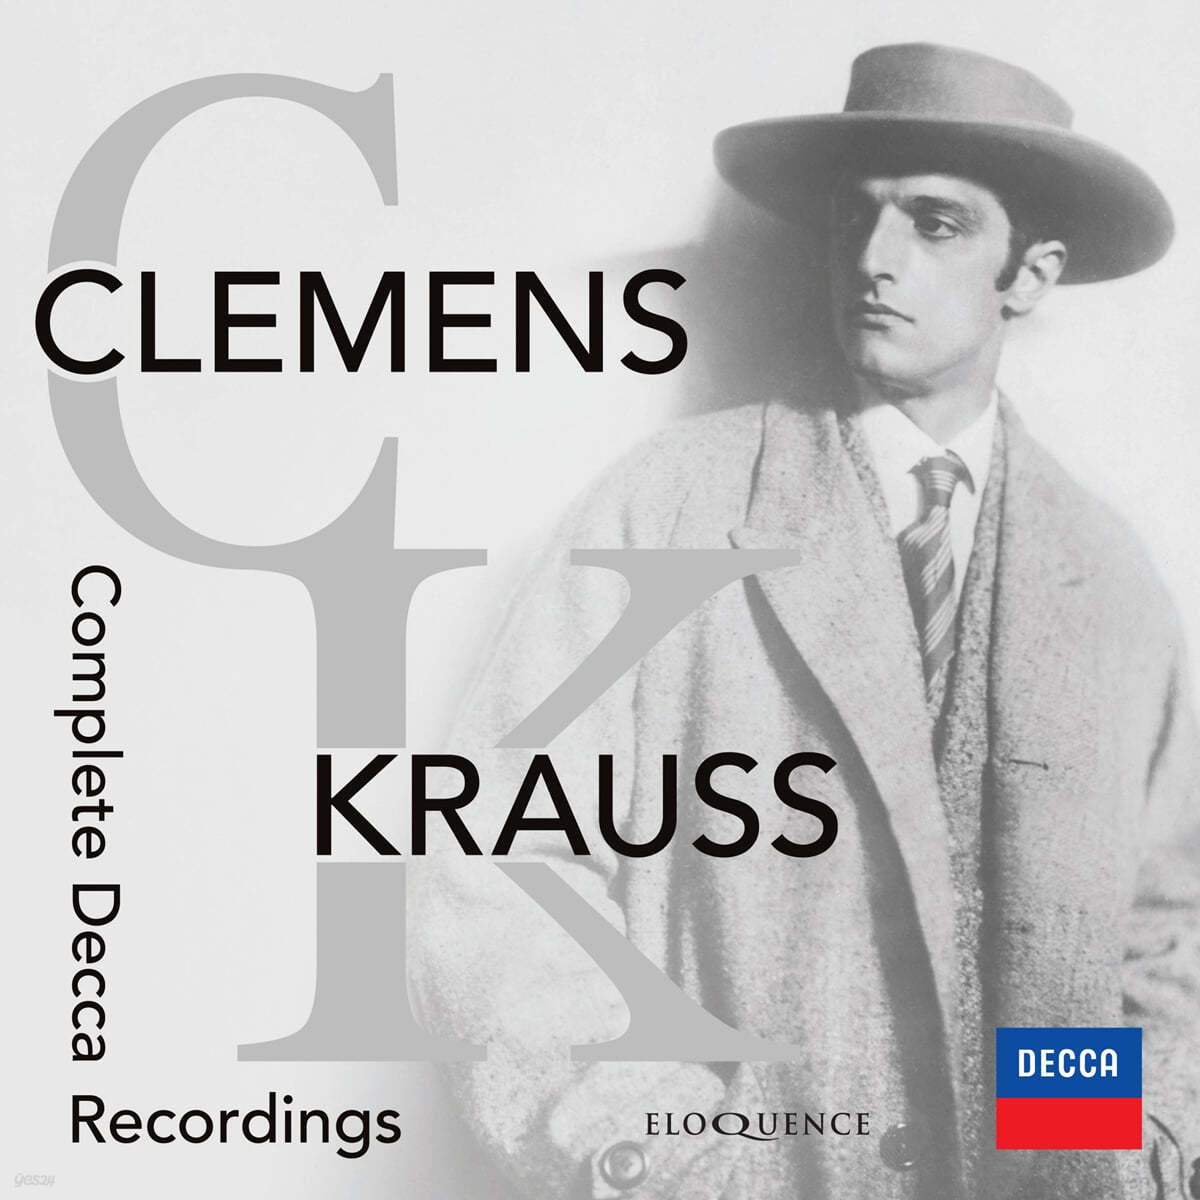 Clemens Krauss 클레멘스 크라우스 데카 레이블 녹음 전집 (Complete Decca Recordings)